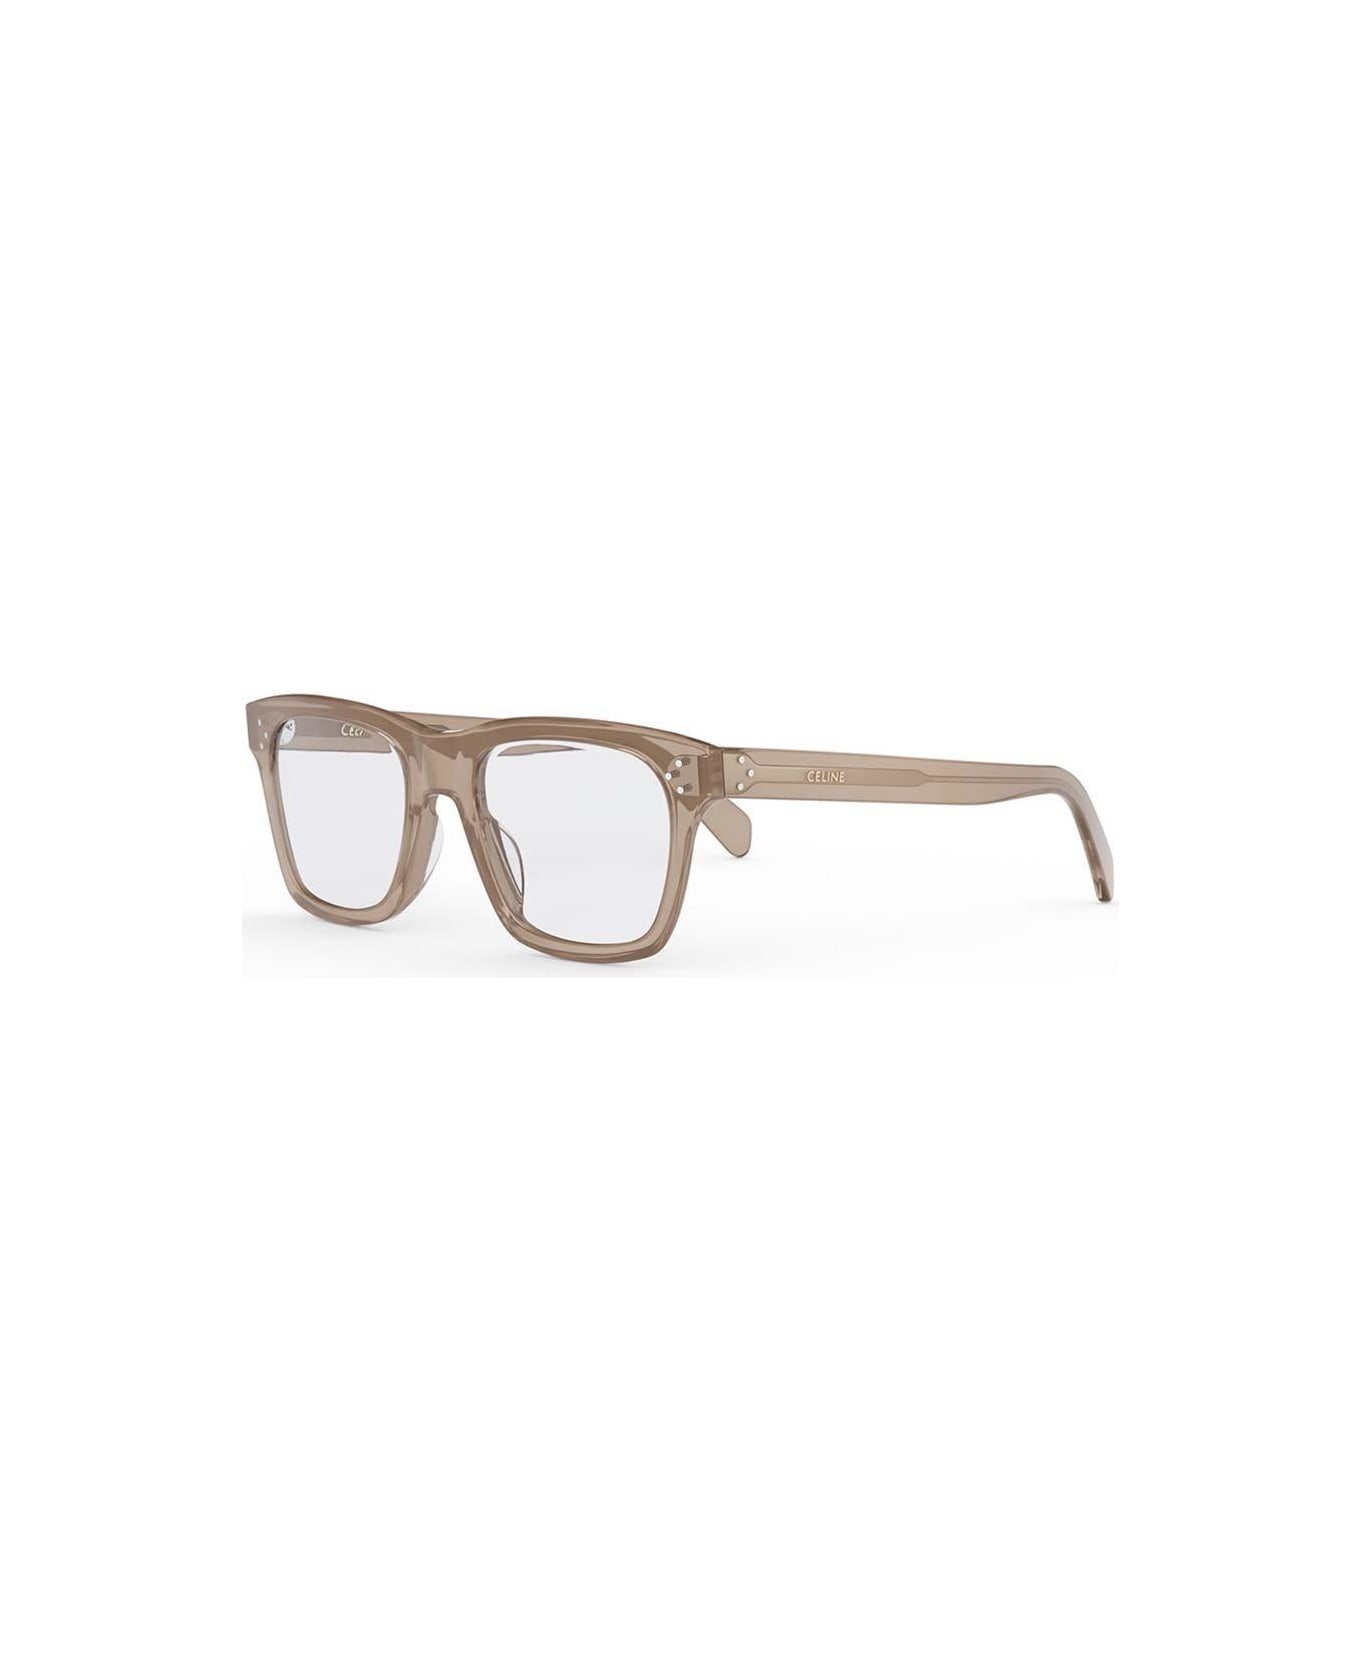 Celine Square Frame Glasses - 059